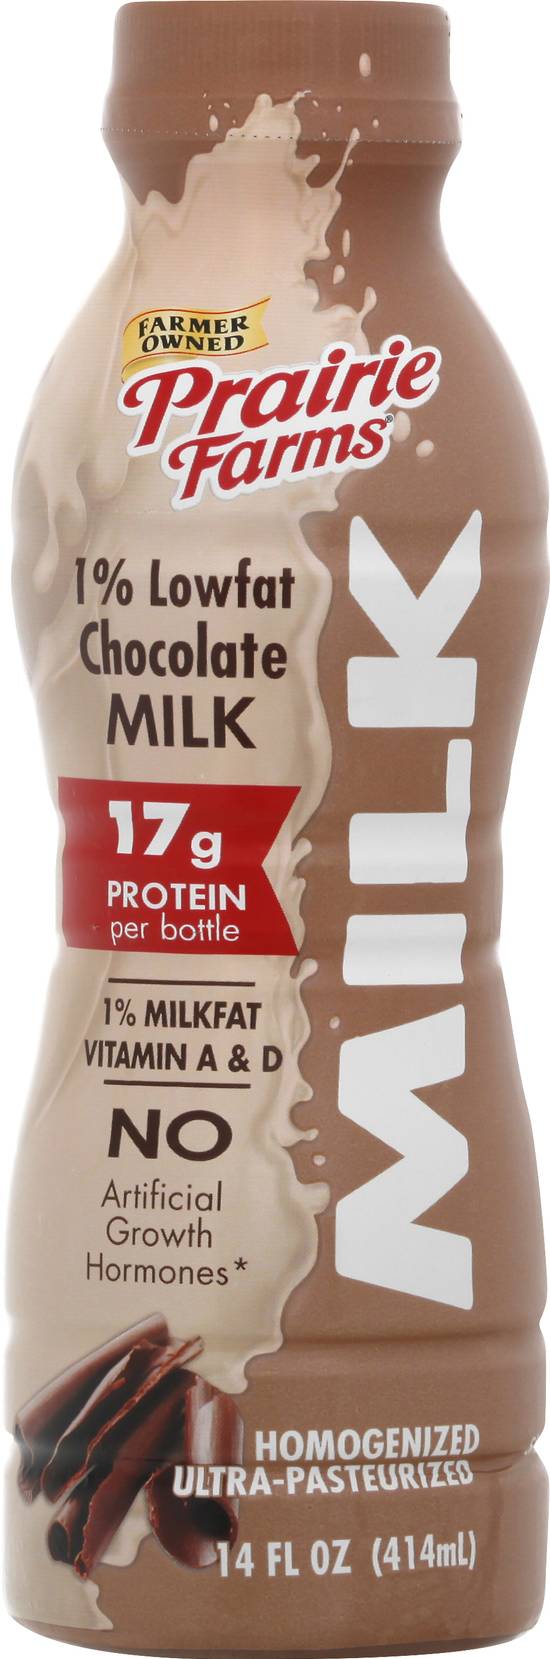 Prairie Farms 1% Lowfat Chocolate Milk (14 fl oz)